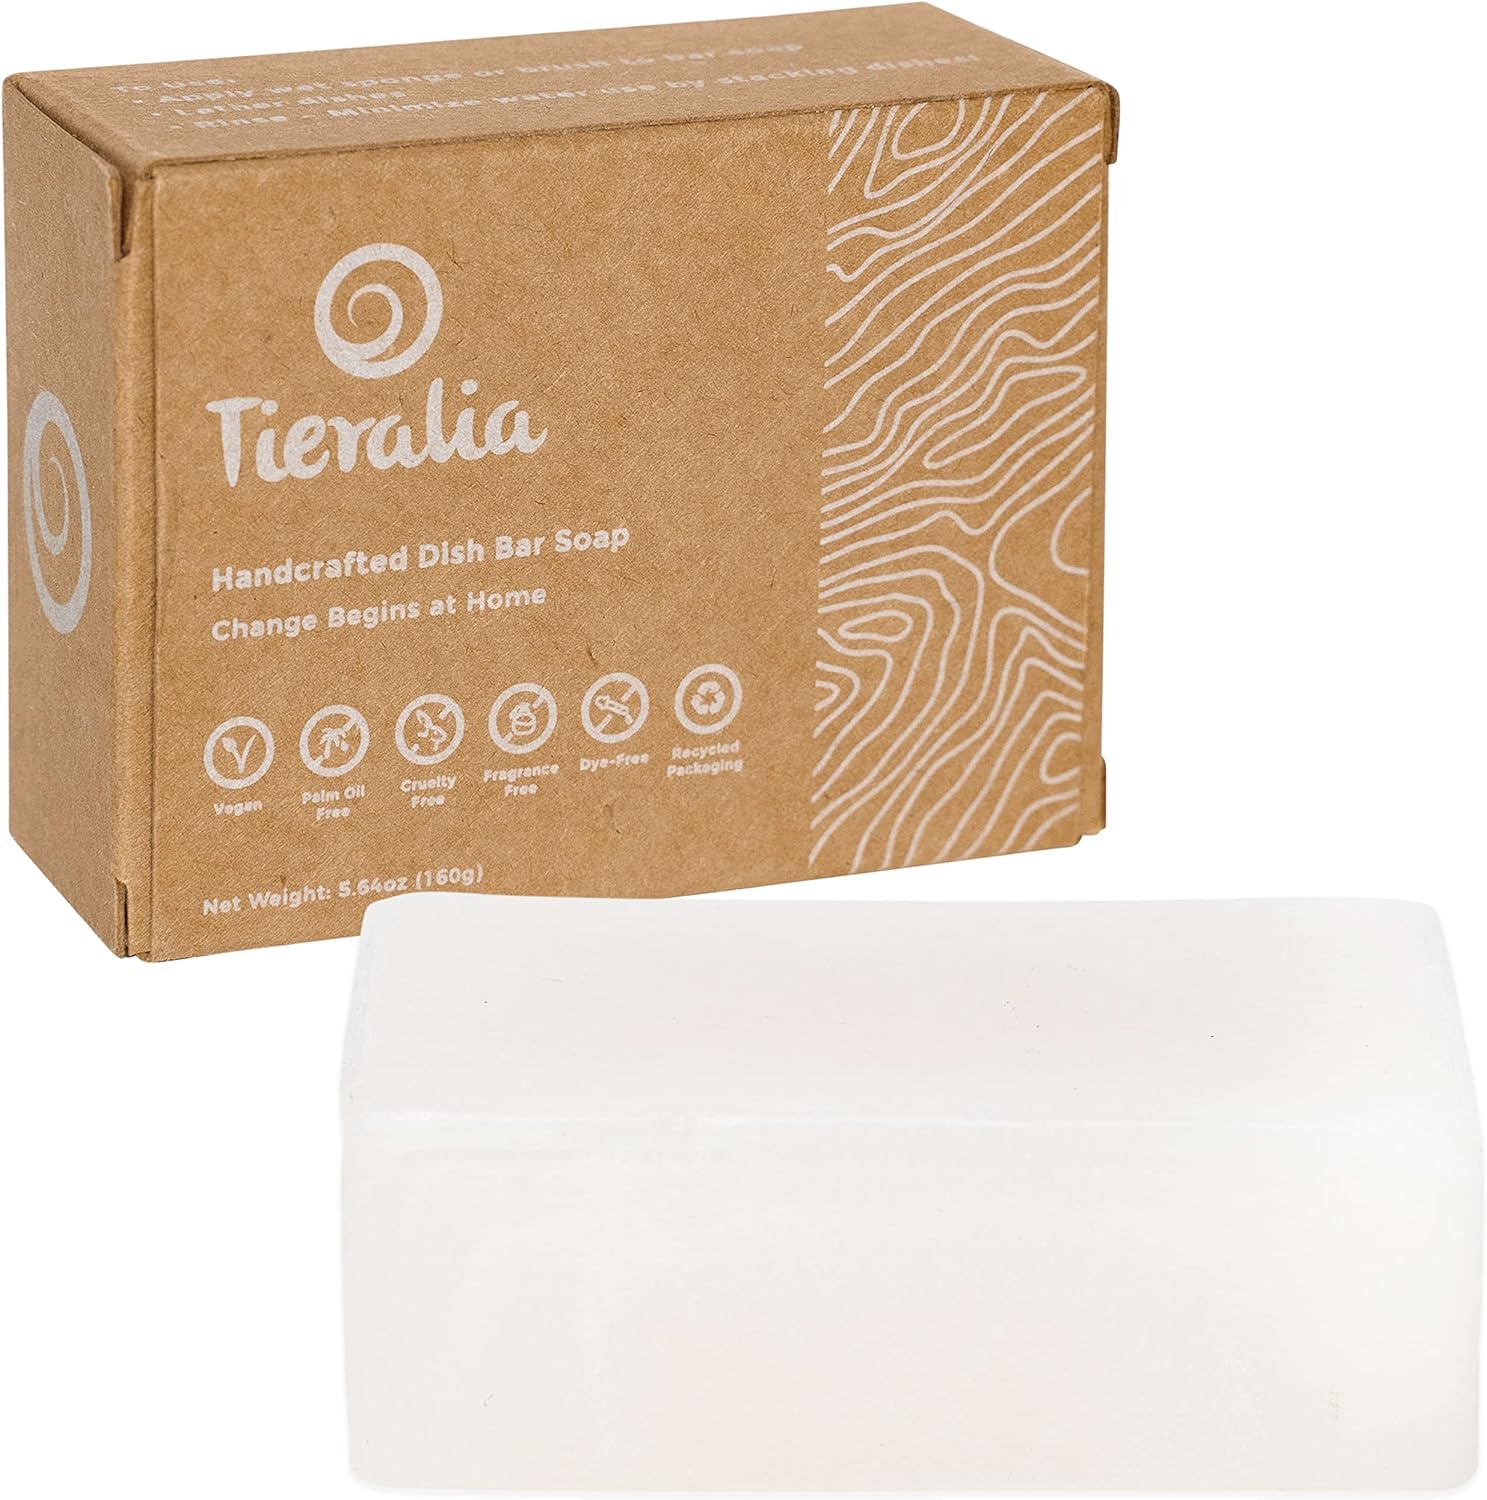 Tieralia Handcrafted Dish Bar Soap - Plant-Based, Zero Waste, Vegan Soap, Unscented Soap, Dish Soap - 5.64oz (Dish Bar Soap)